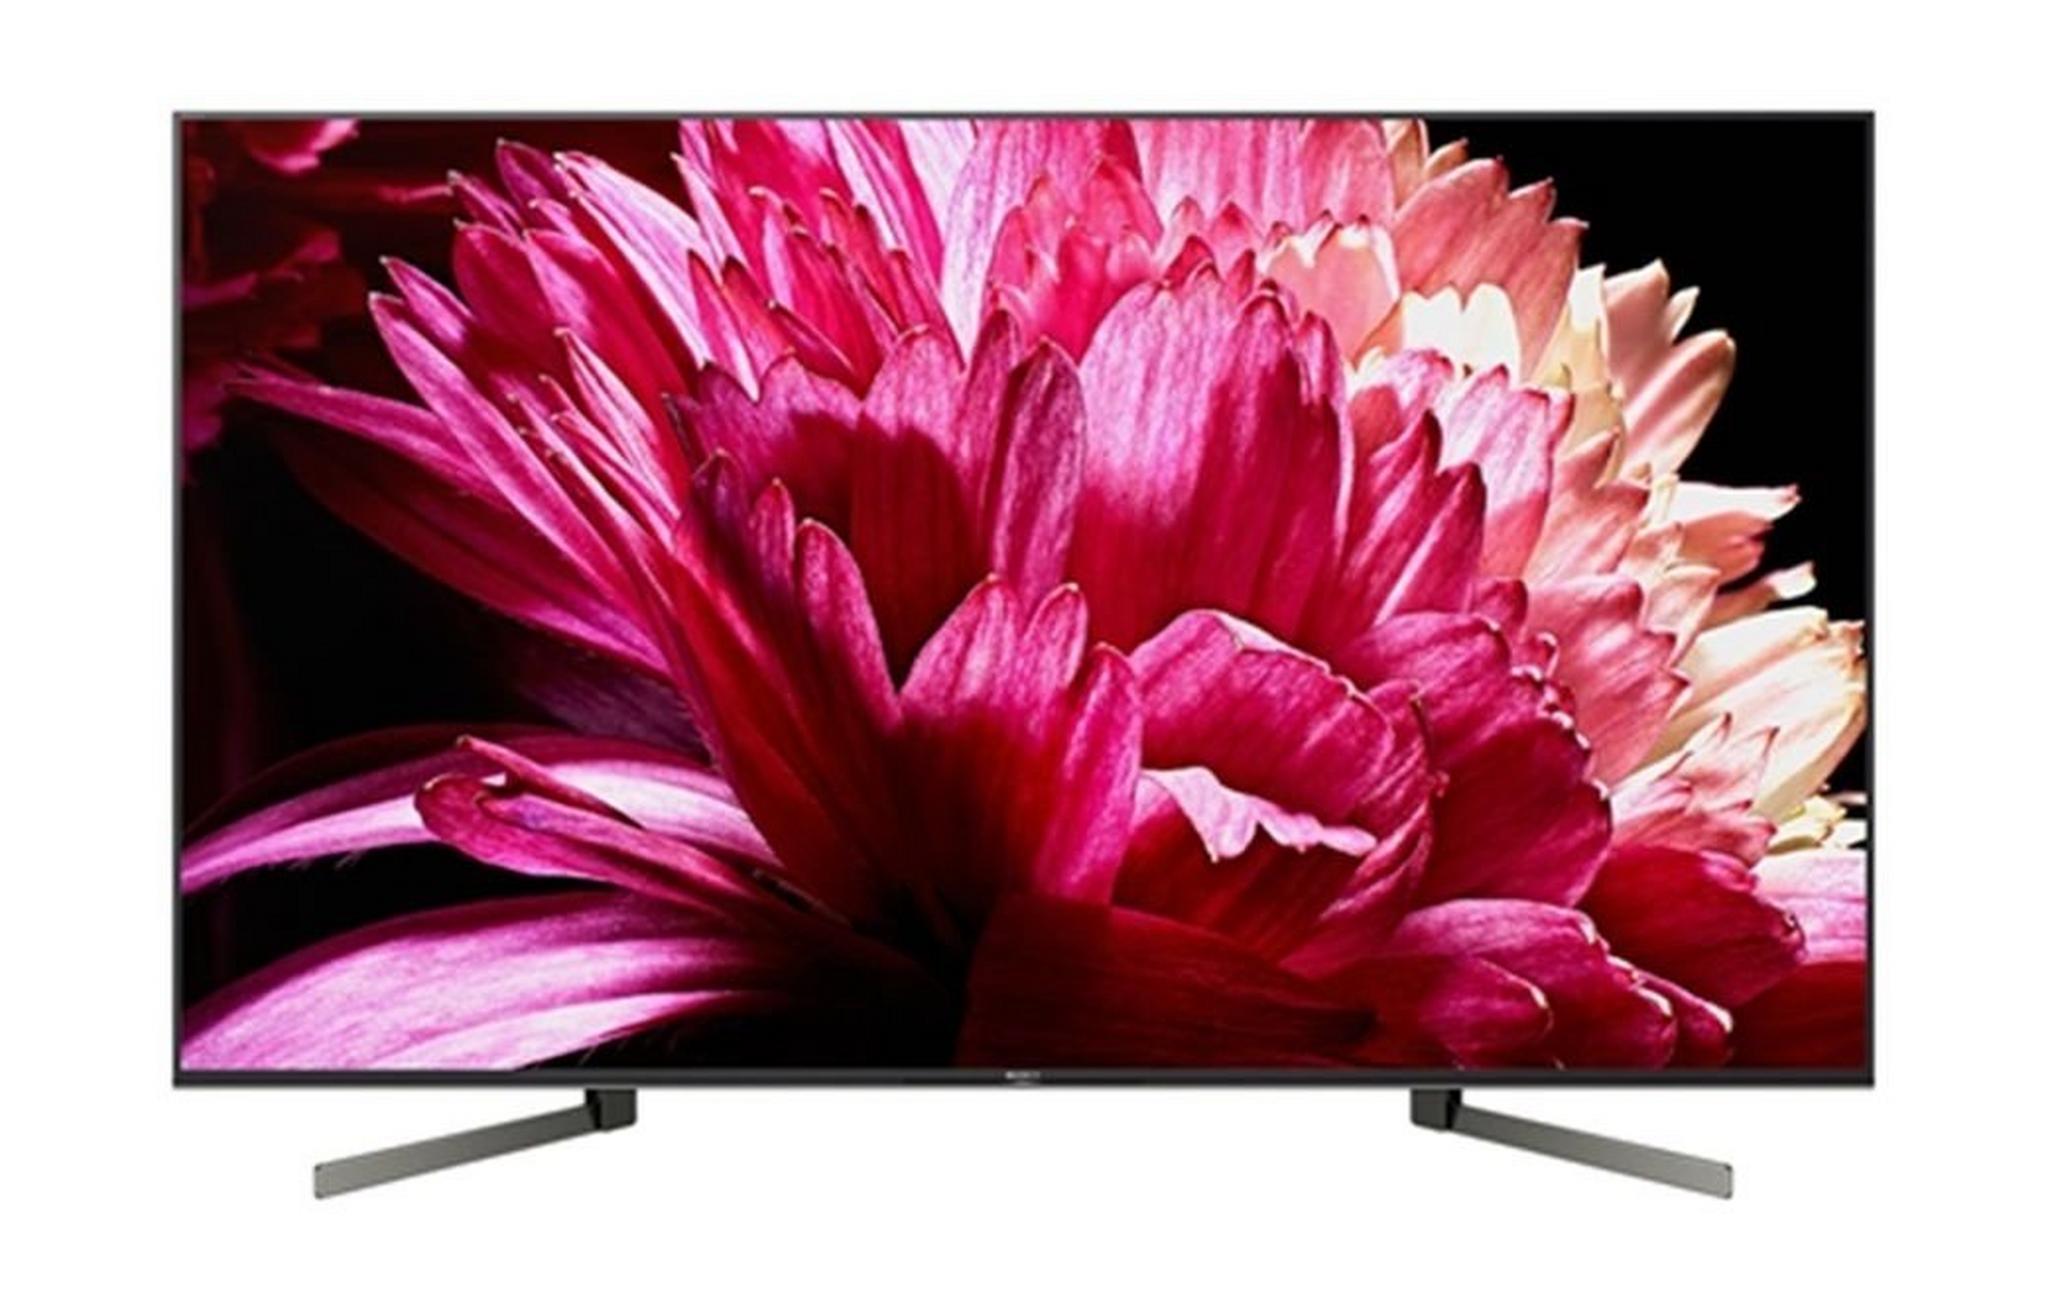 SONY 75 inch 4K Ultra HD Smart LED TV - 75X9500G